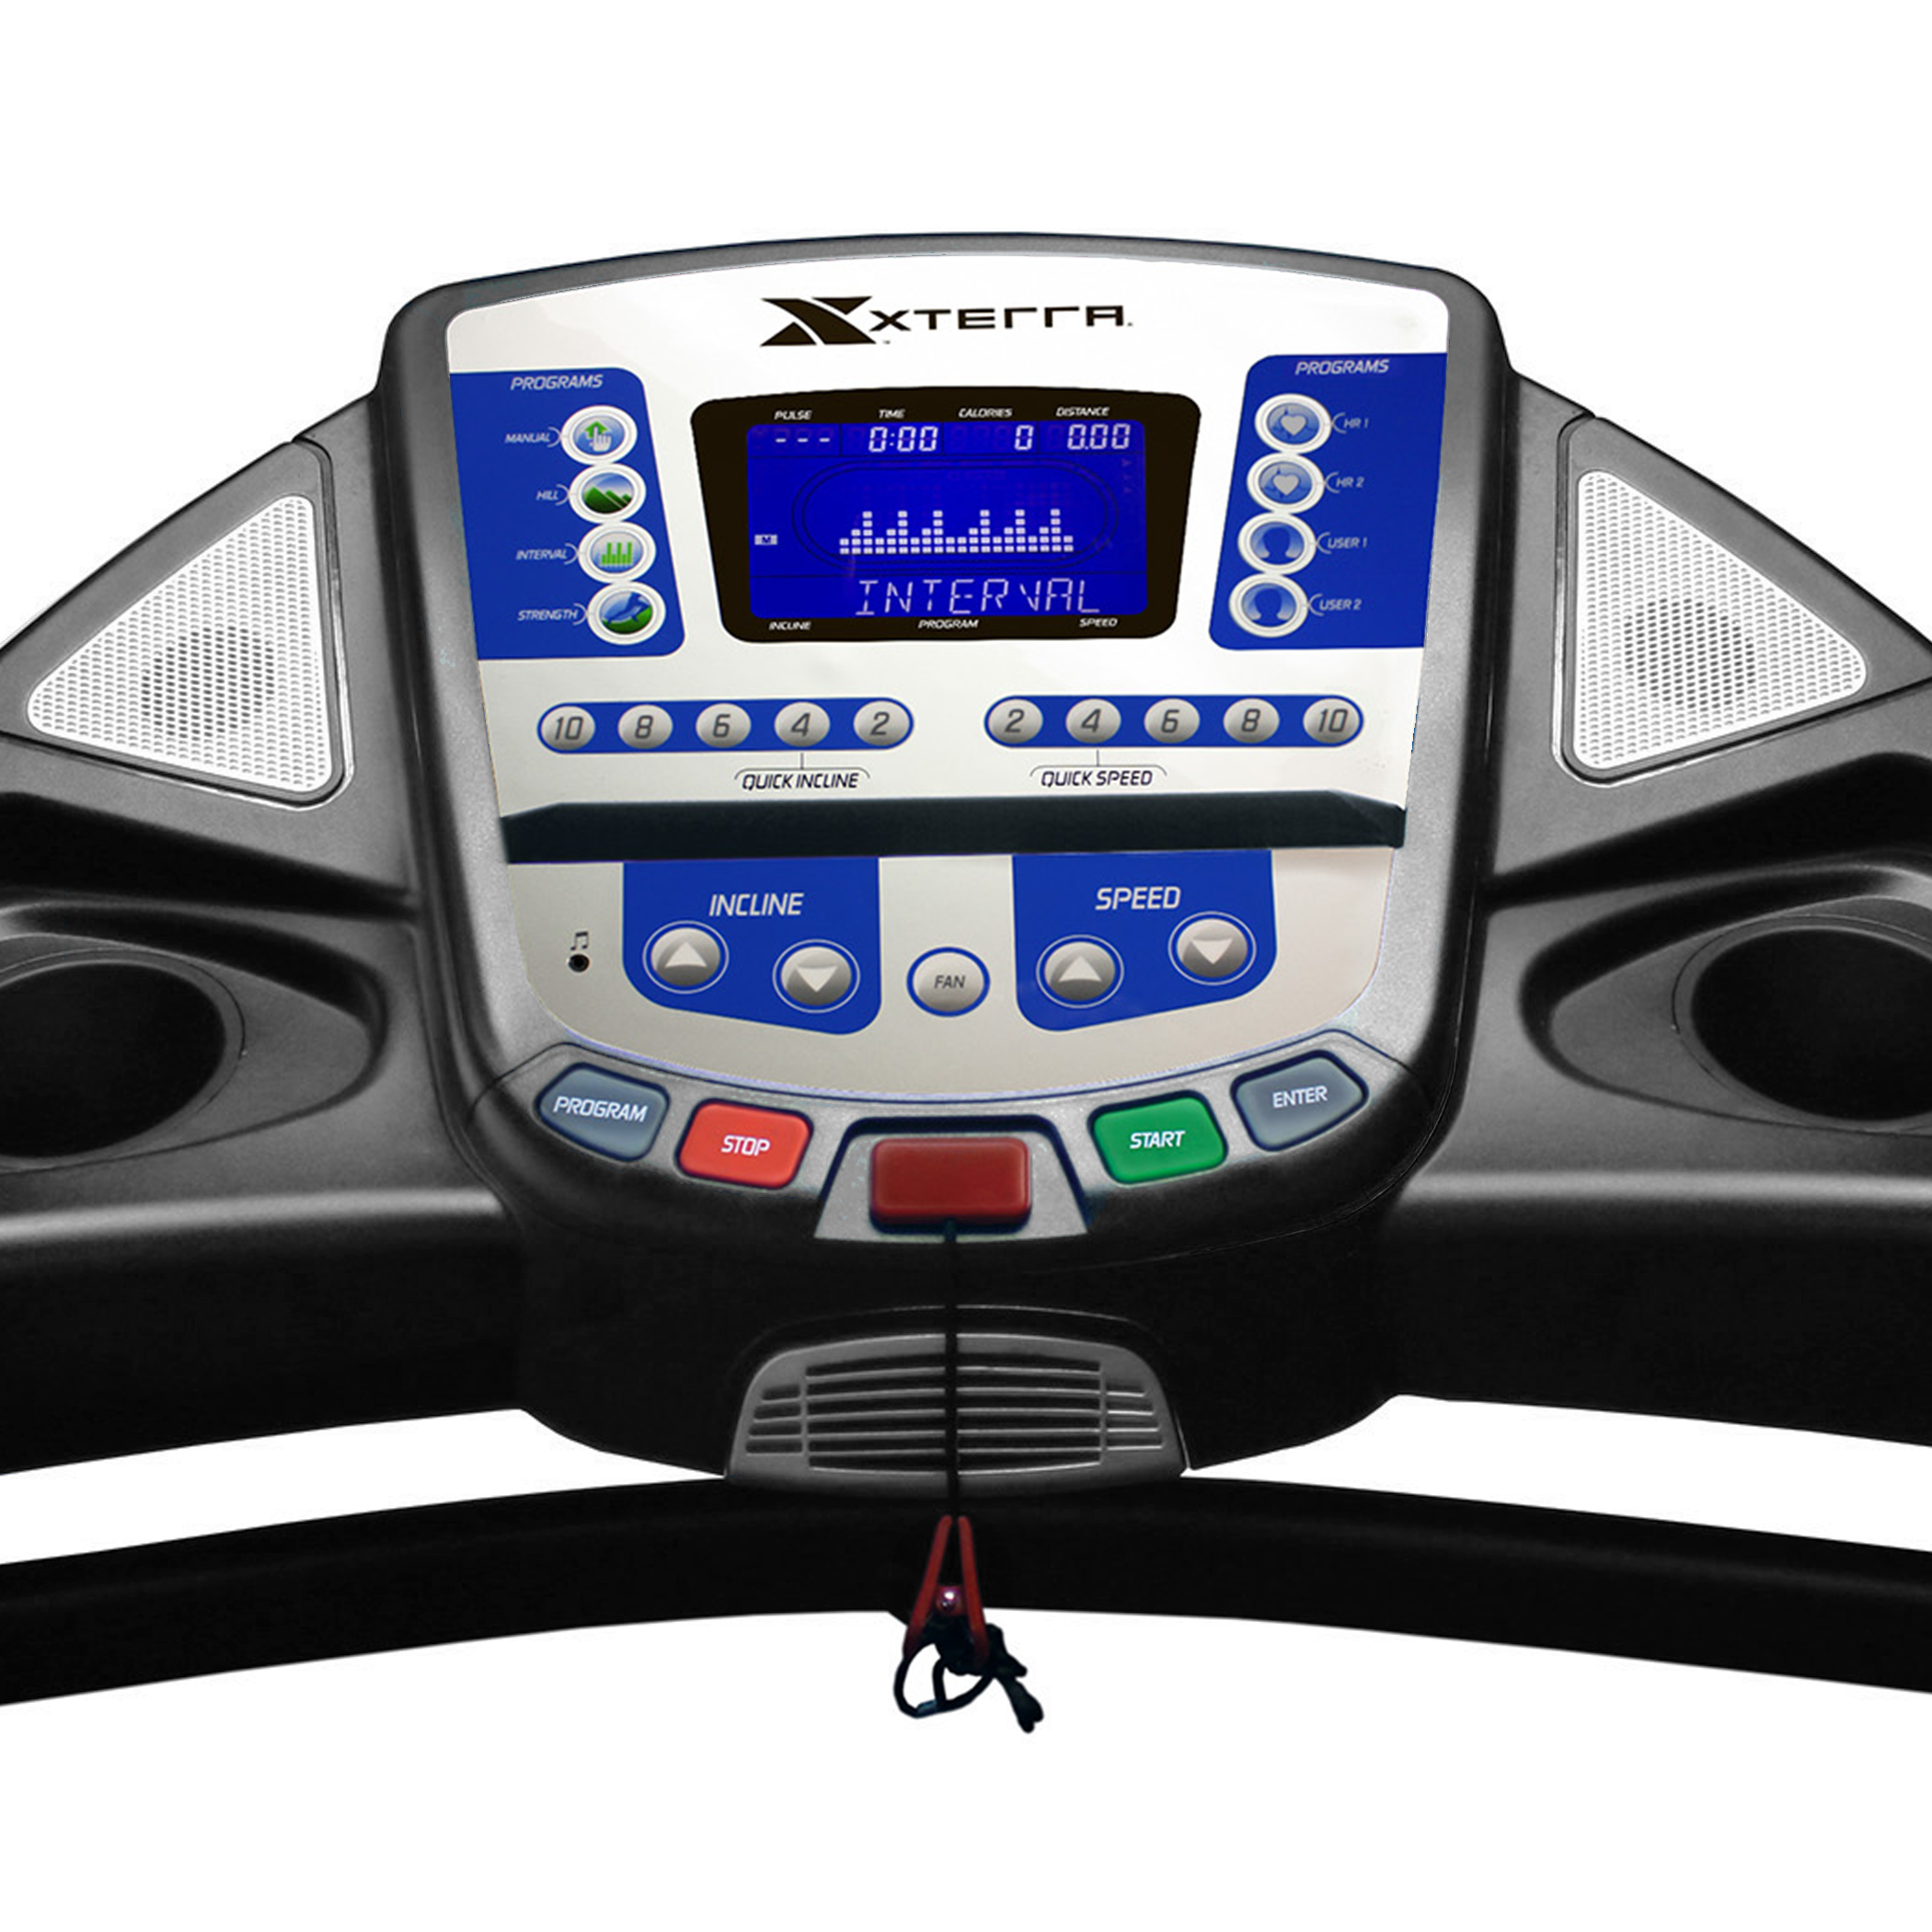 Xterra TR6.7 treadmill console